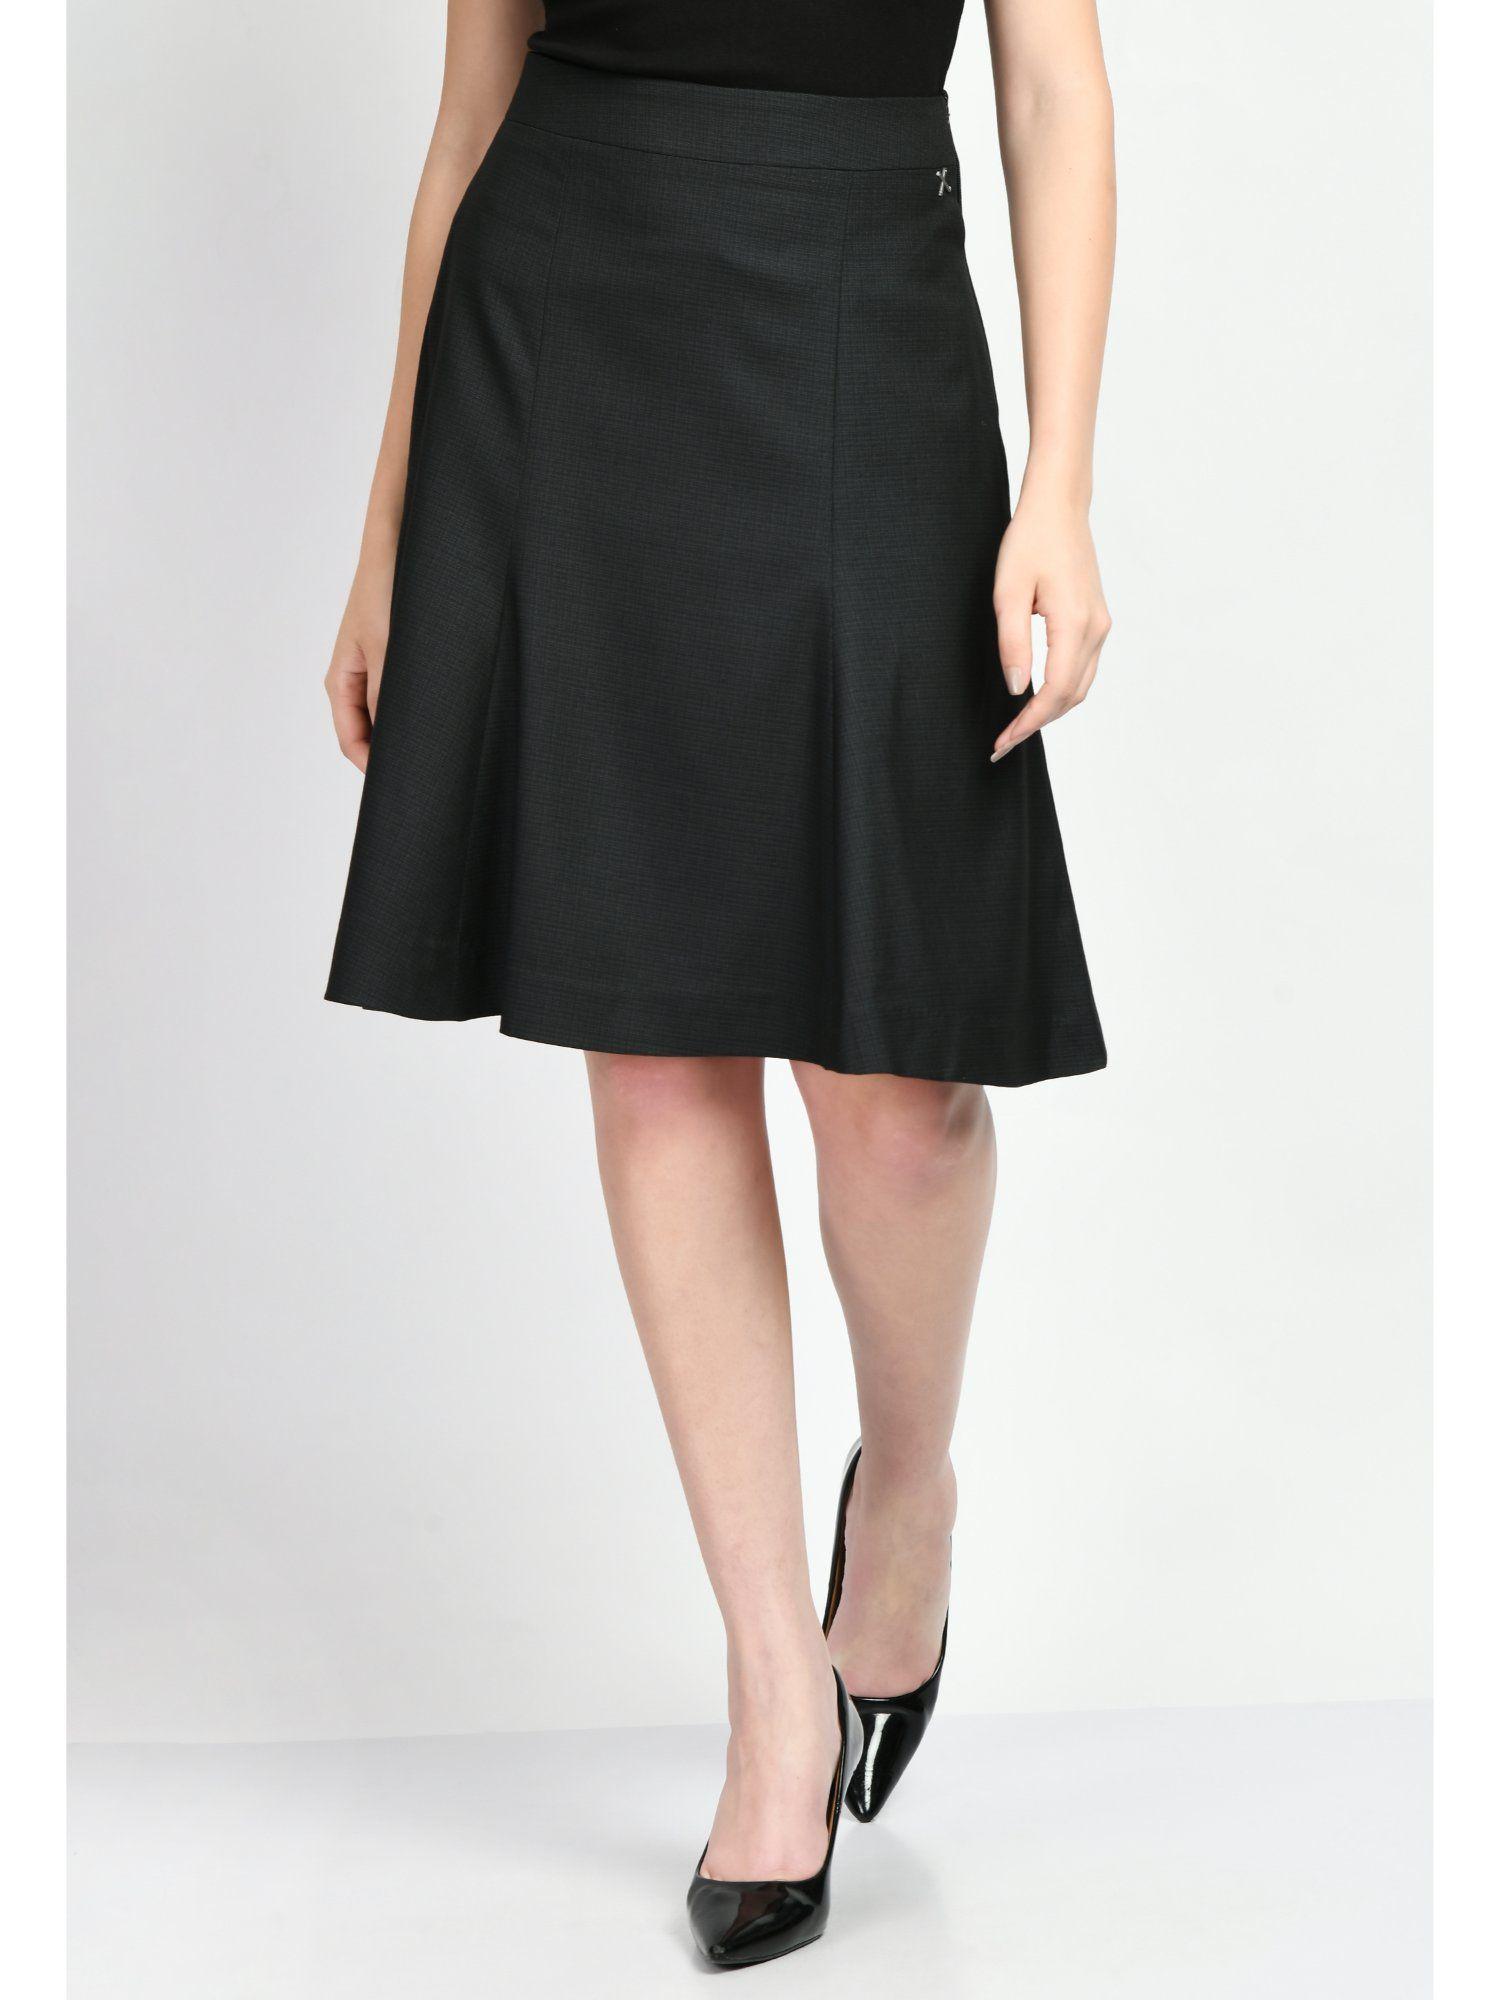 decisiveness-self-checked-a-line-skirt---black